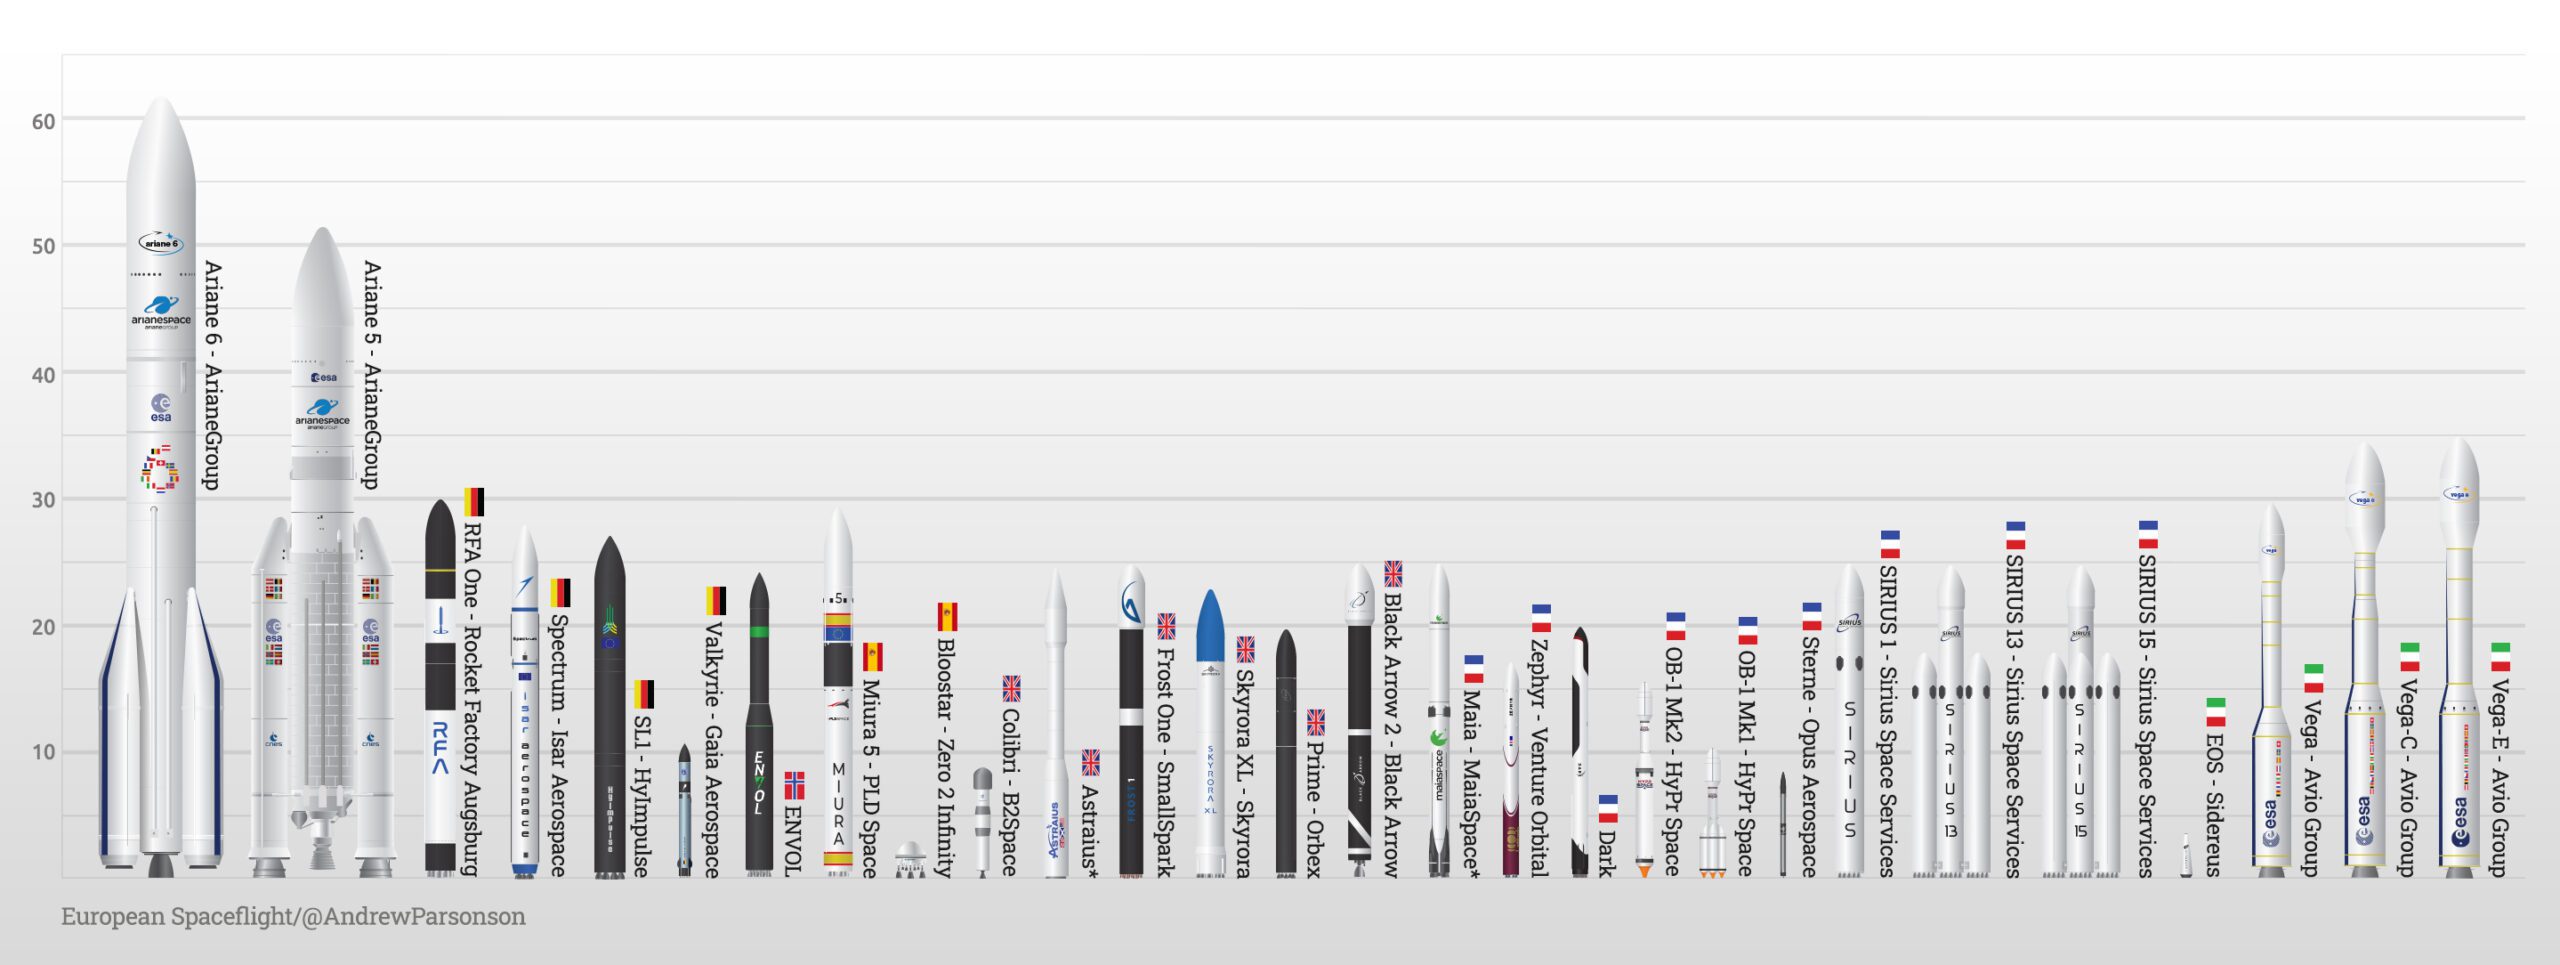 European Spaceflight's compendium of European rocket companies.